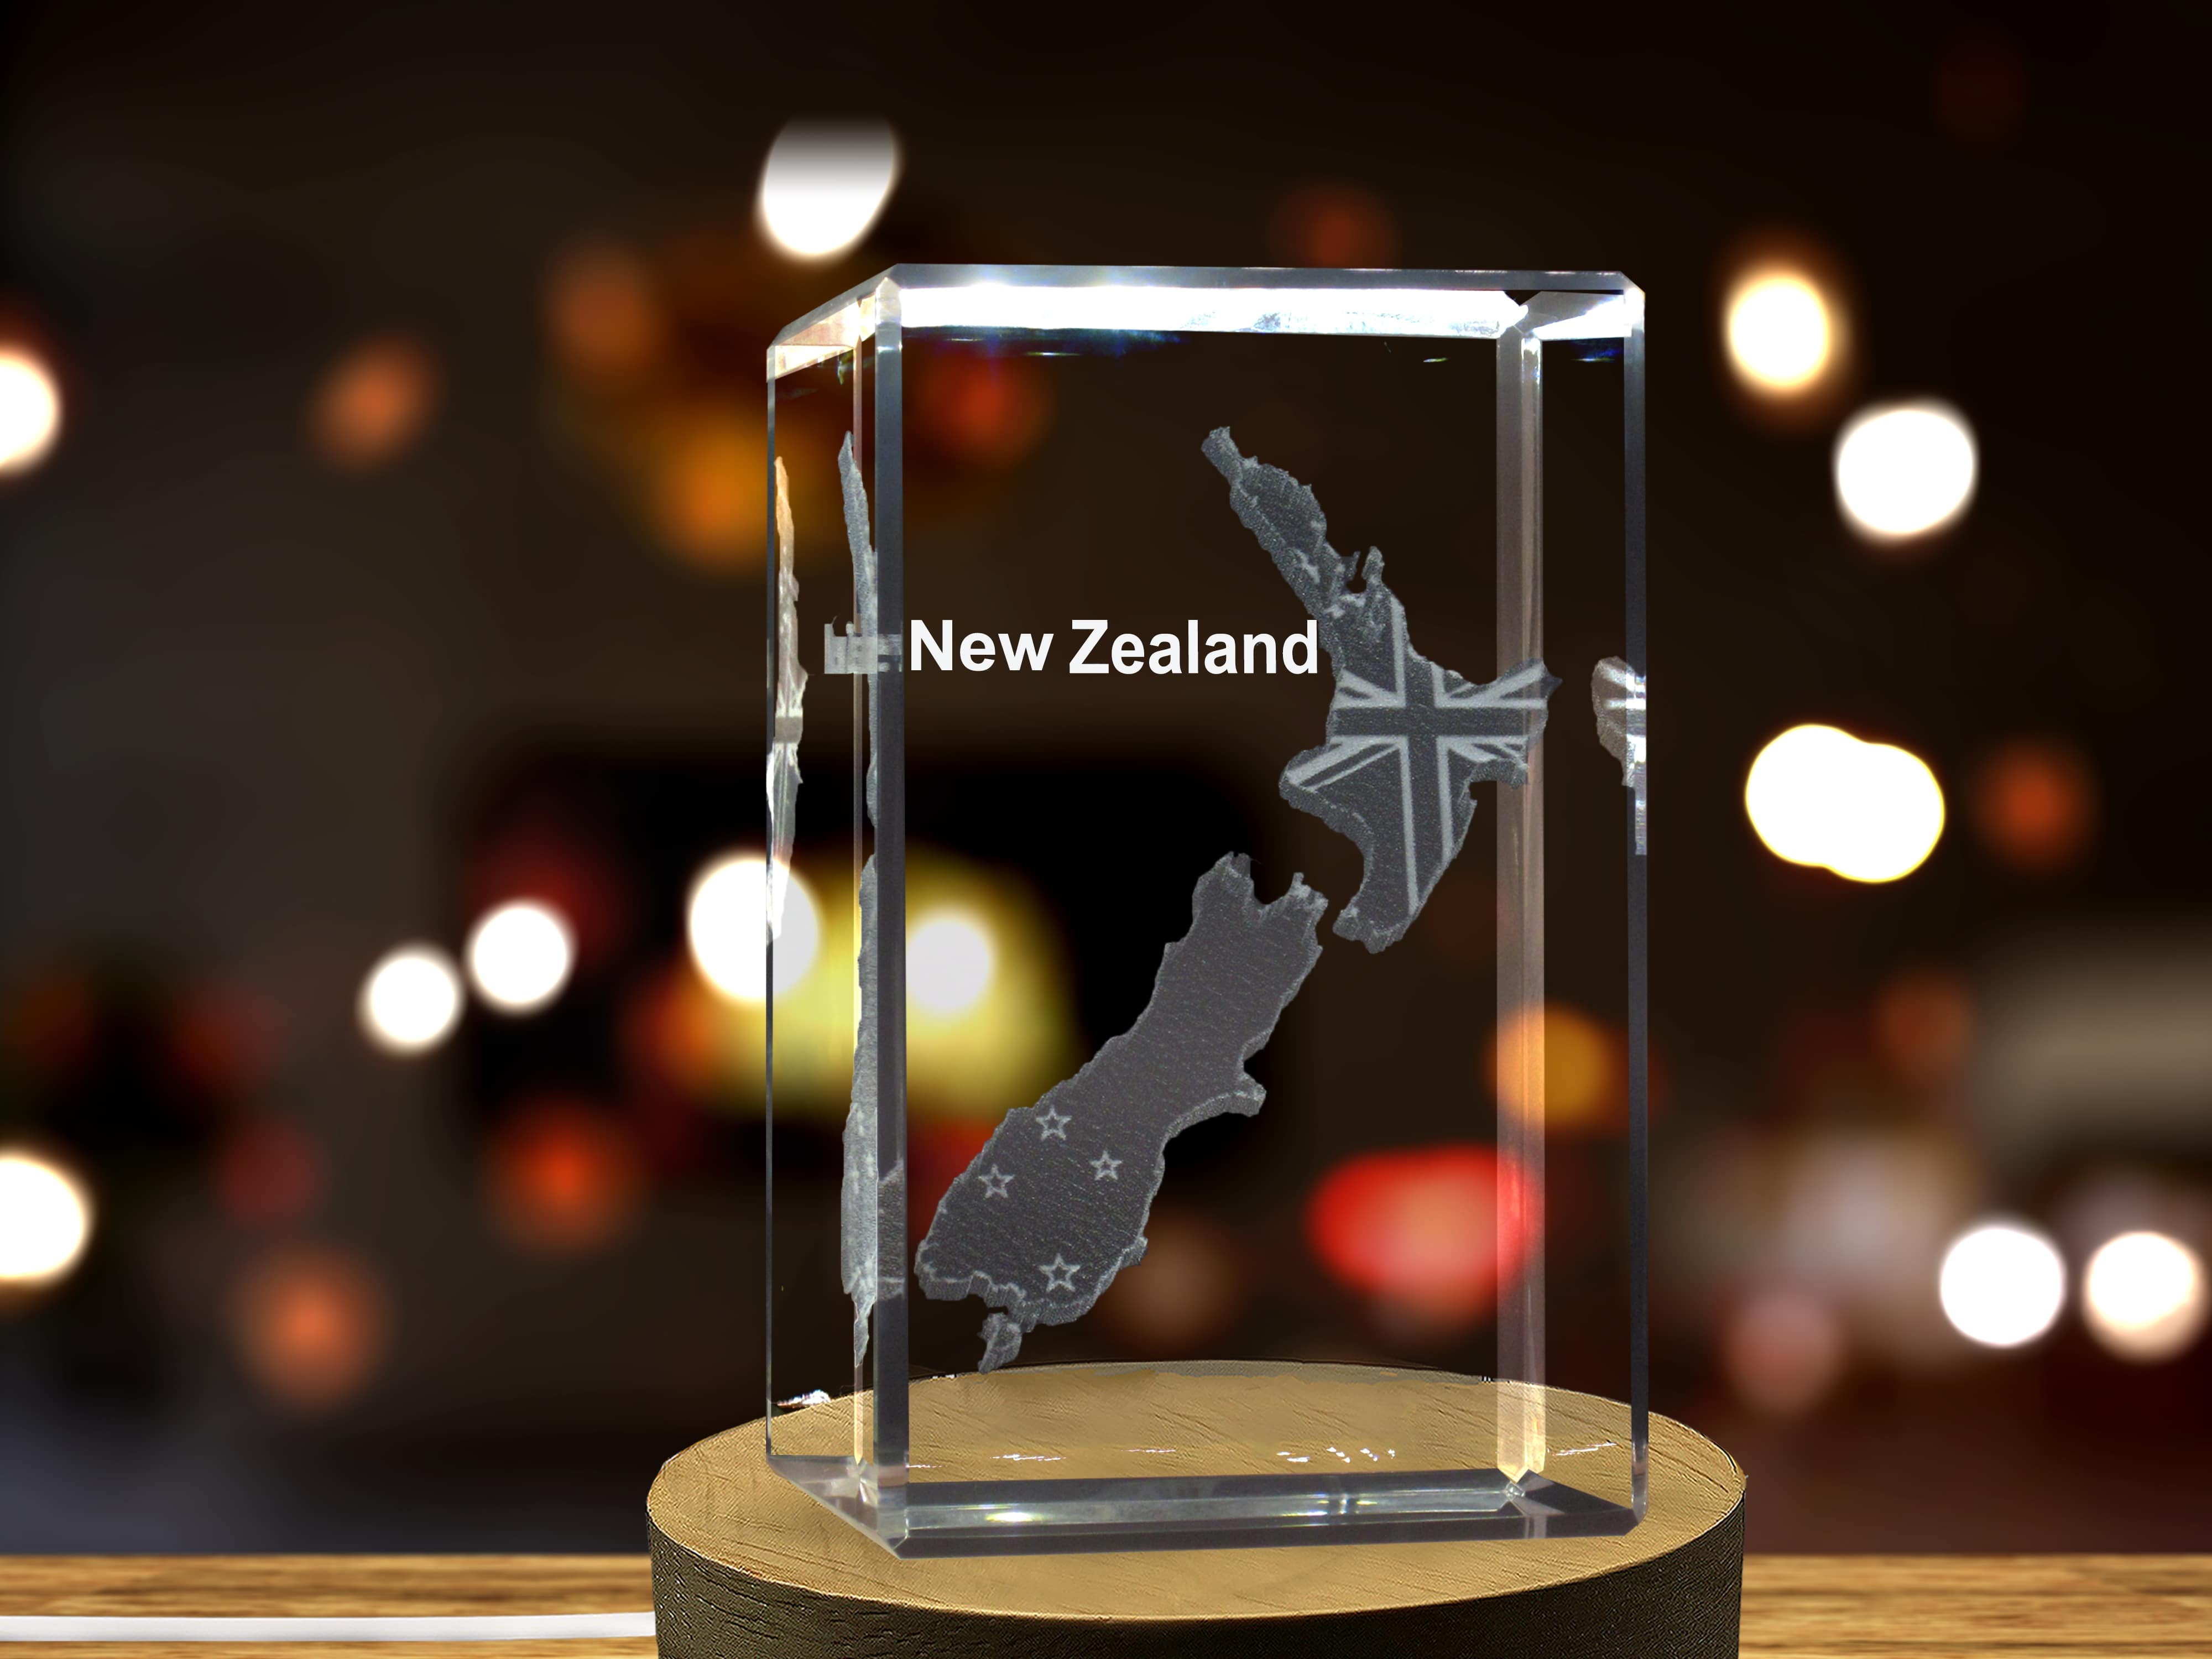 New Zealand 3D Engraved Crystal 3D Engraved Crystal Keepsake/Gift/Decor/Collectible/Souvenir A&B Crystal Collection